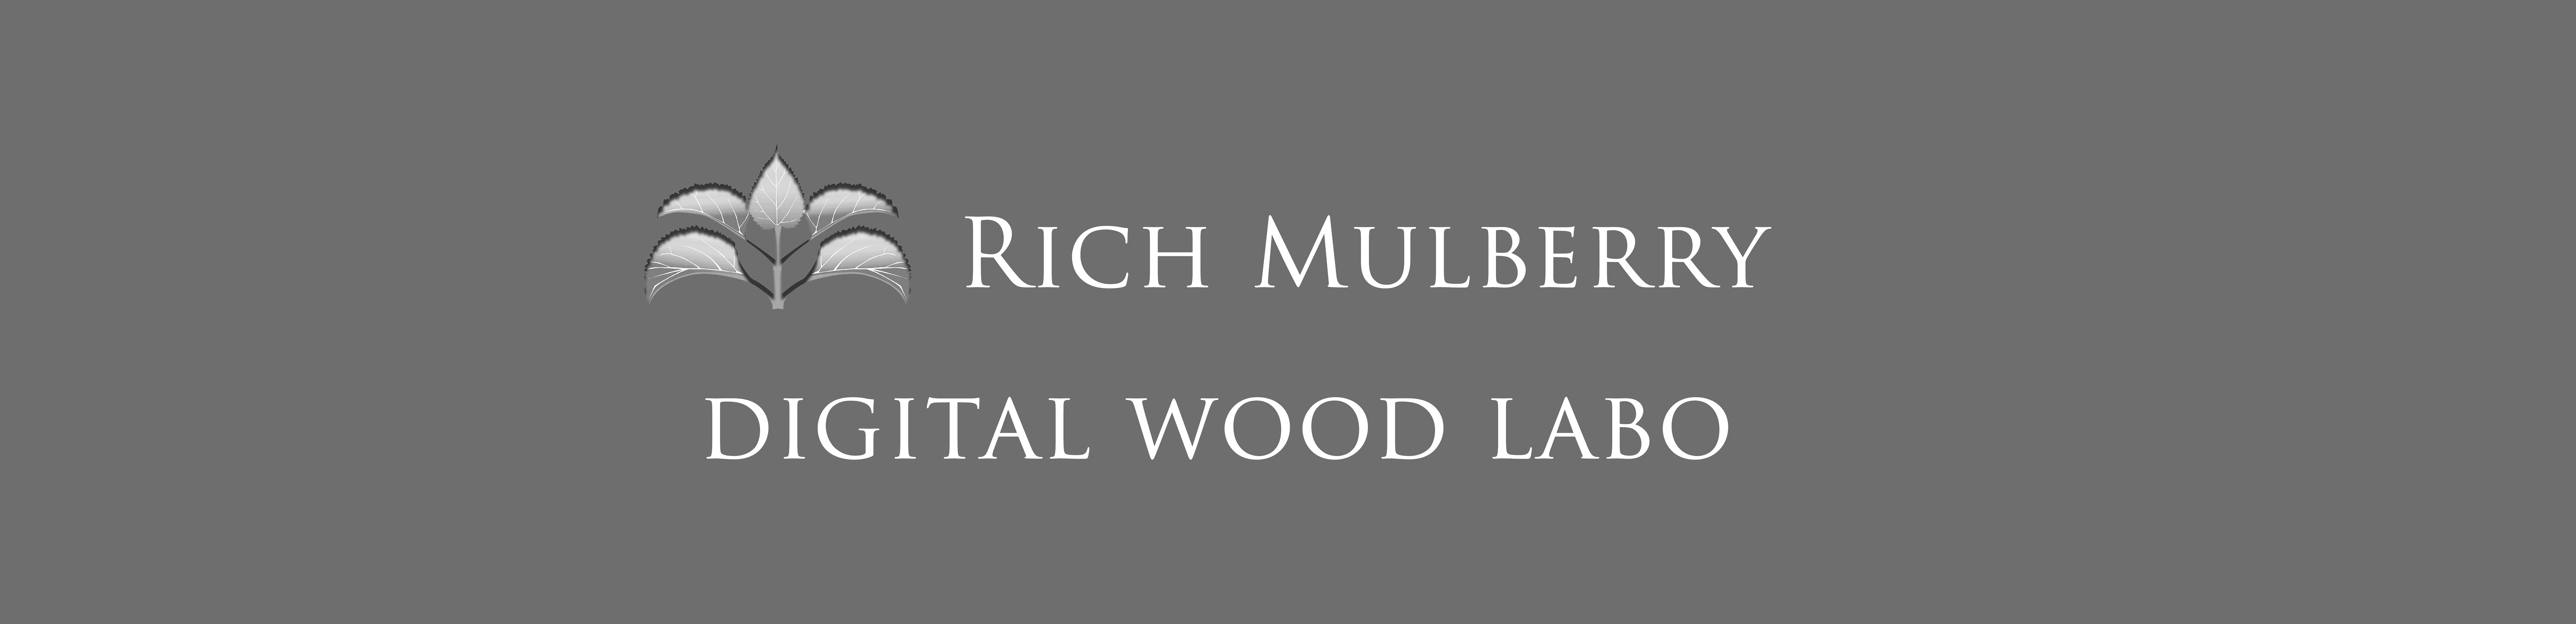 Rich Mulberry Digital Wood Labo